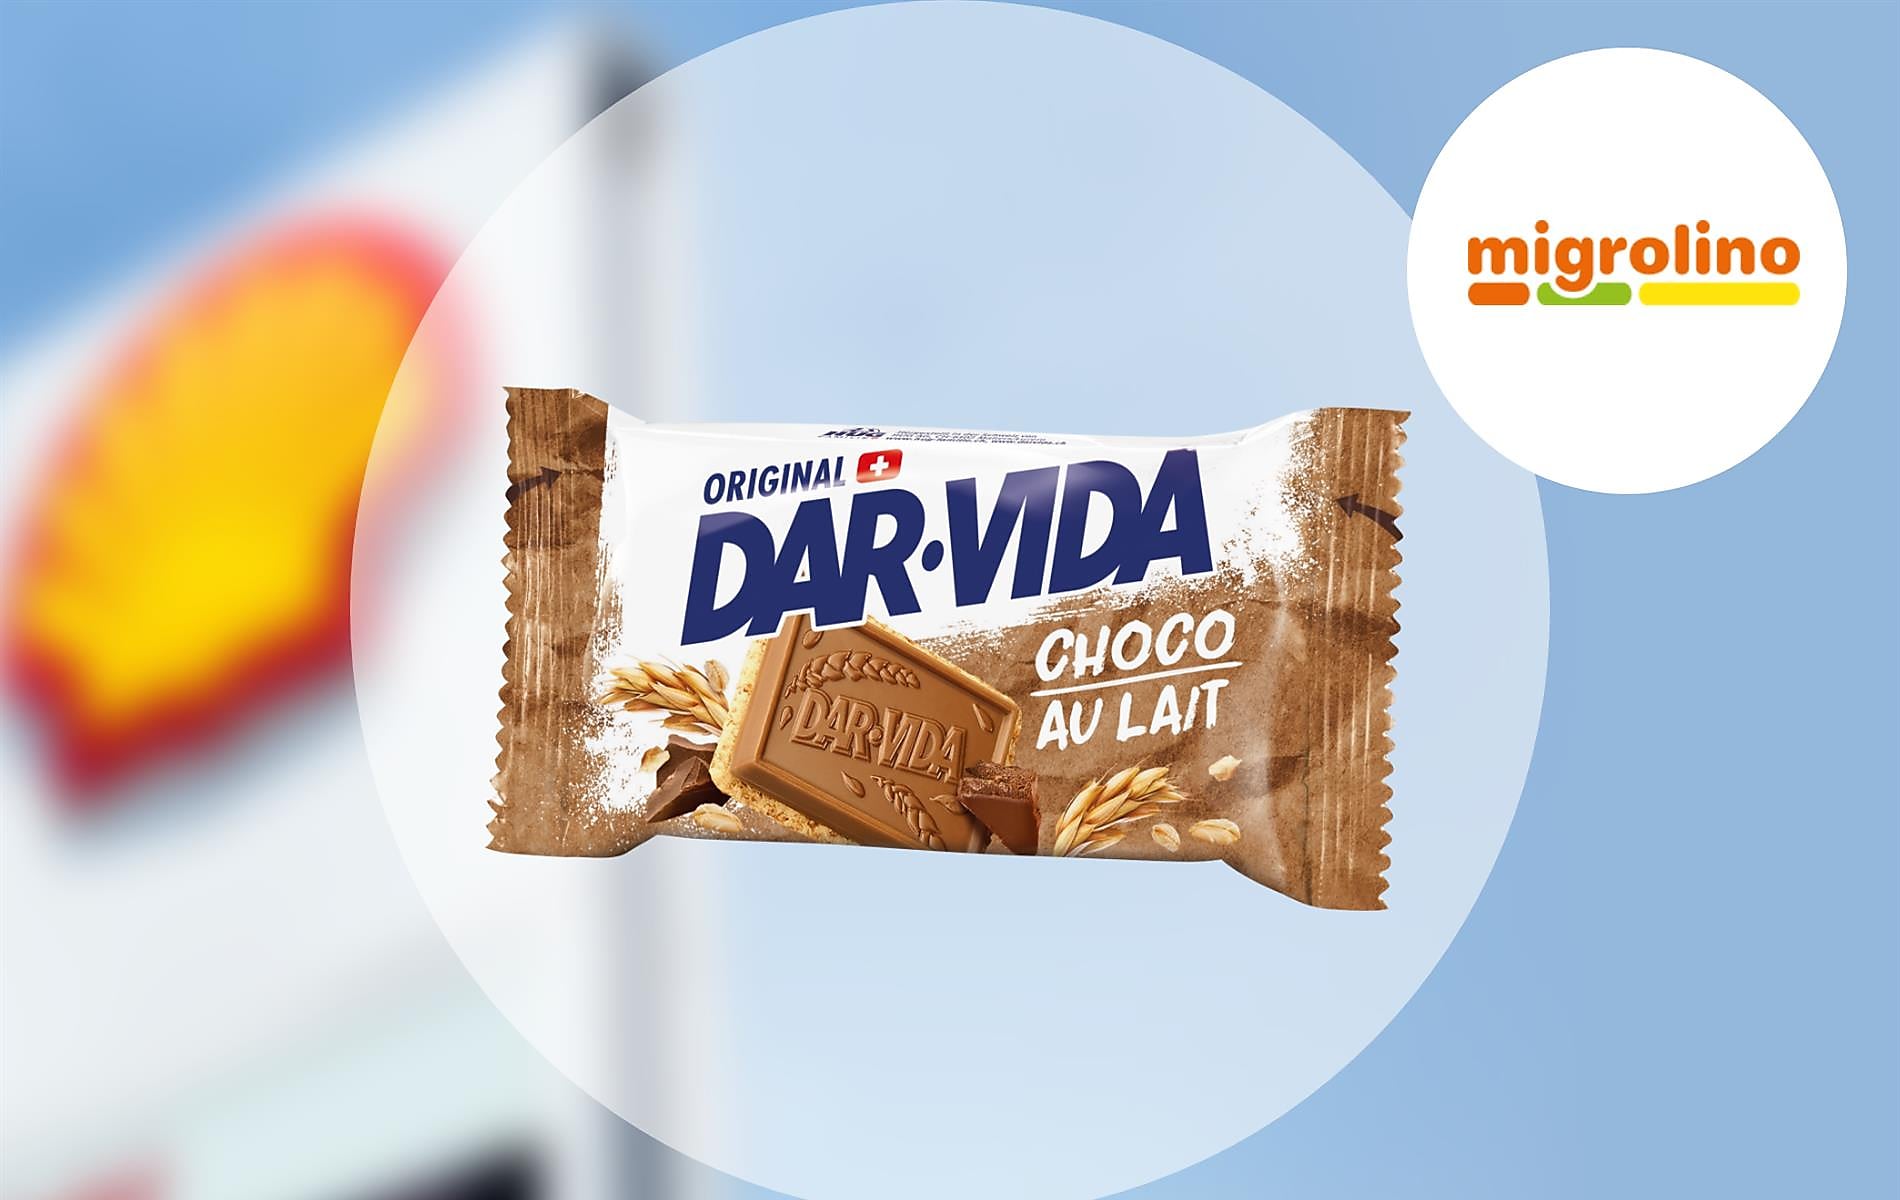 DAR-VIDA Choco lait 46g für CHF 1.10